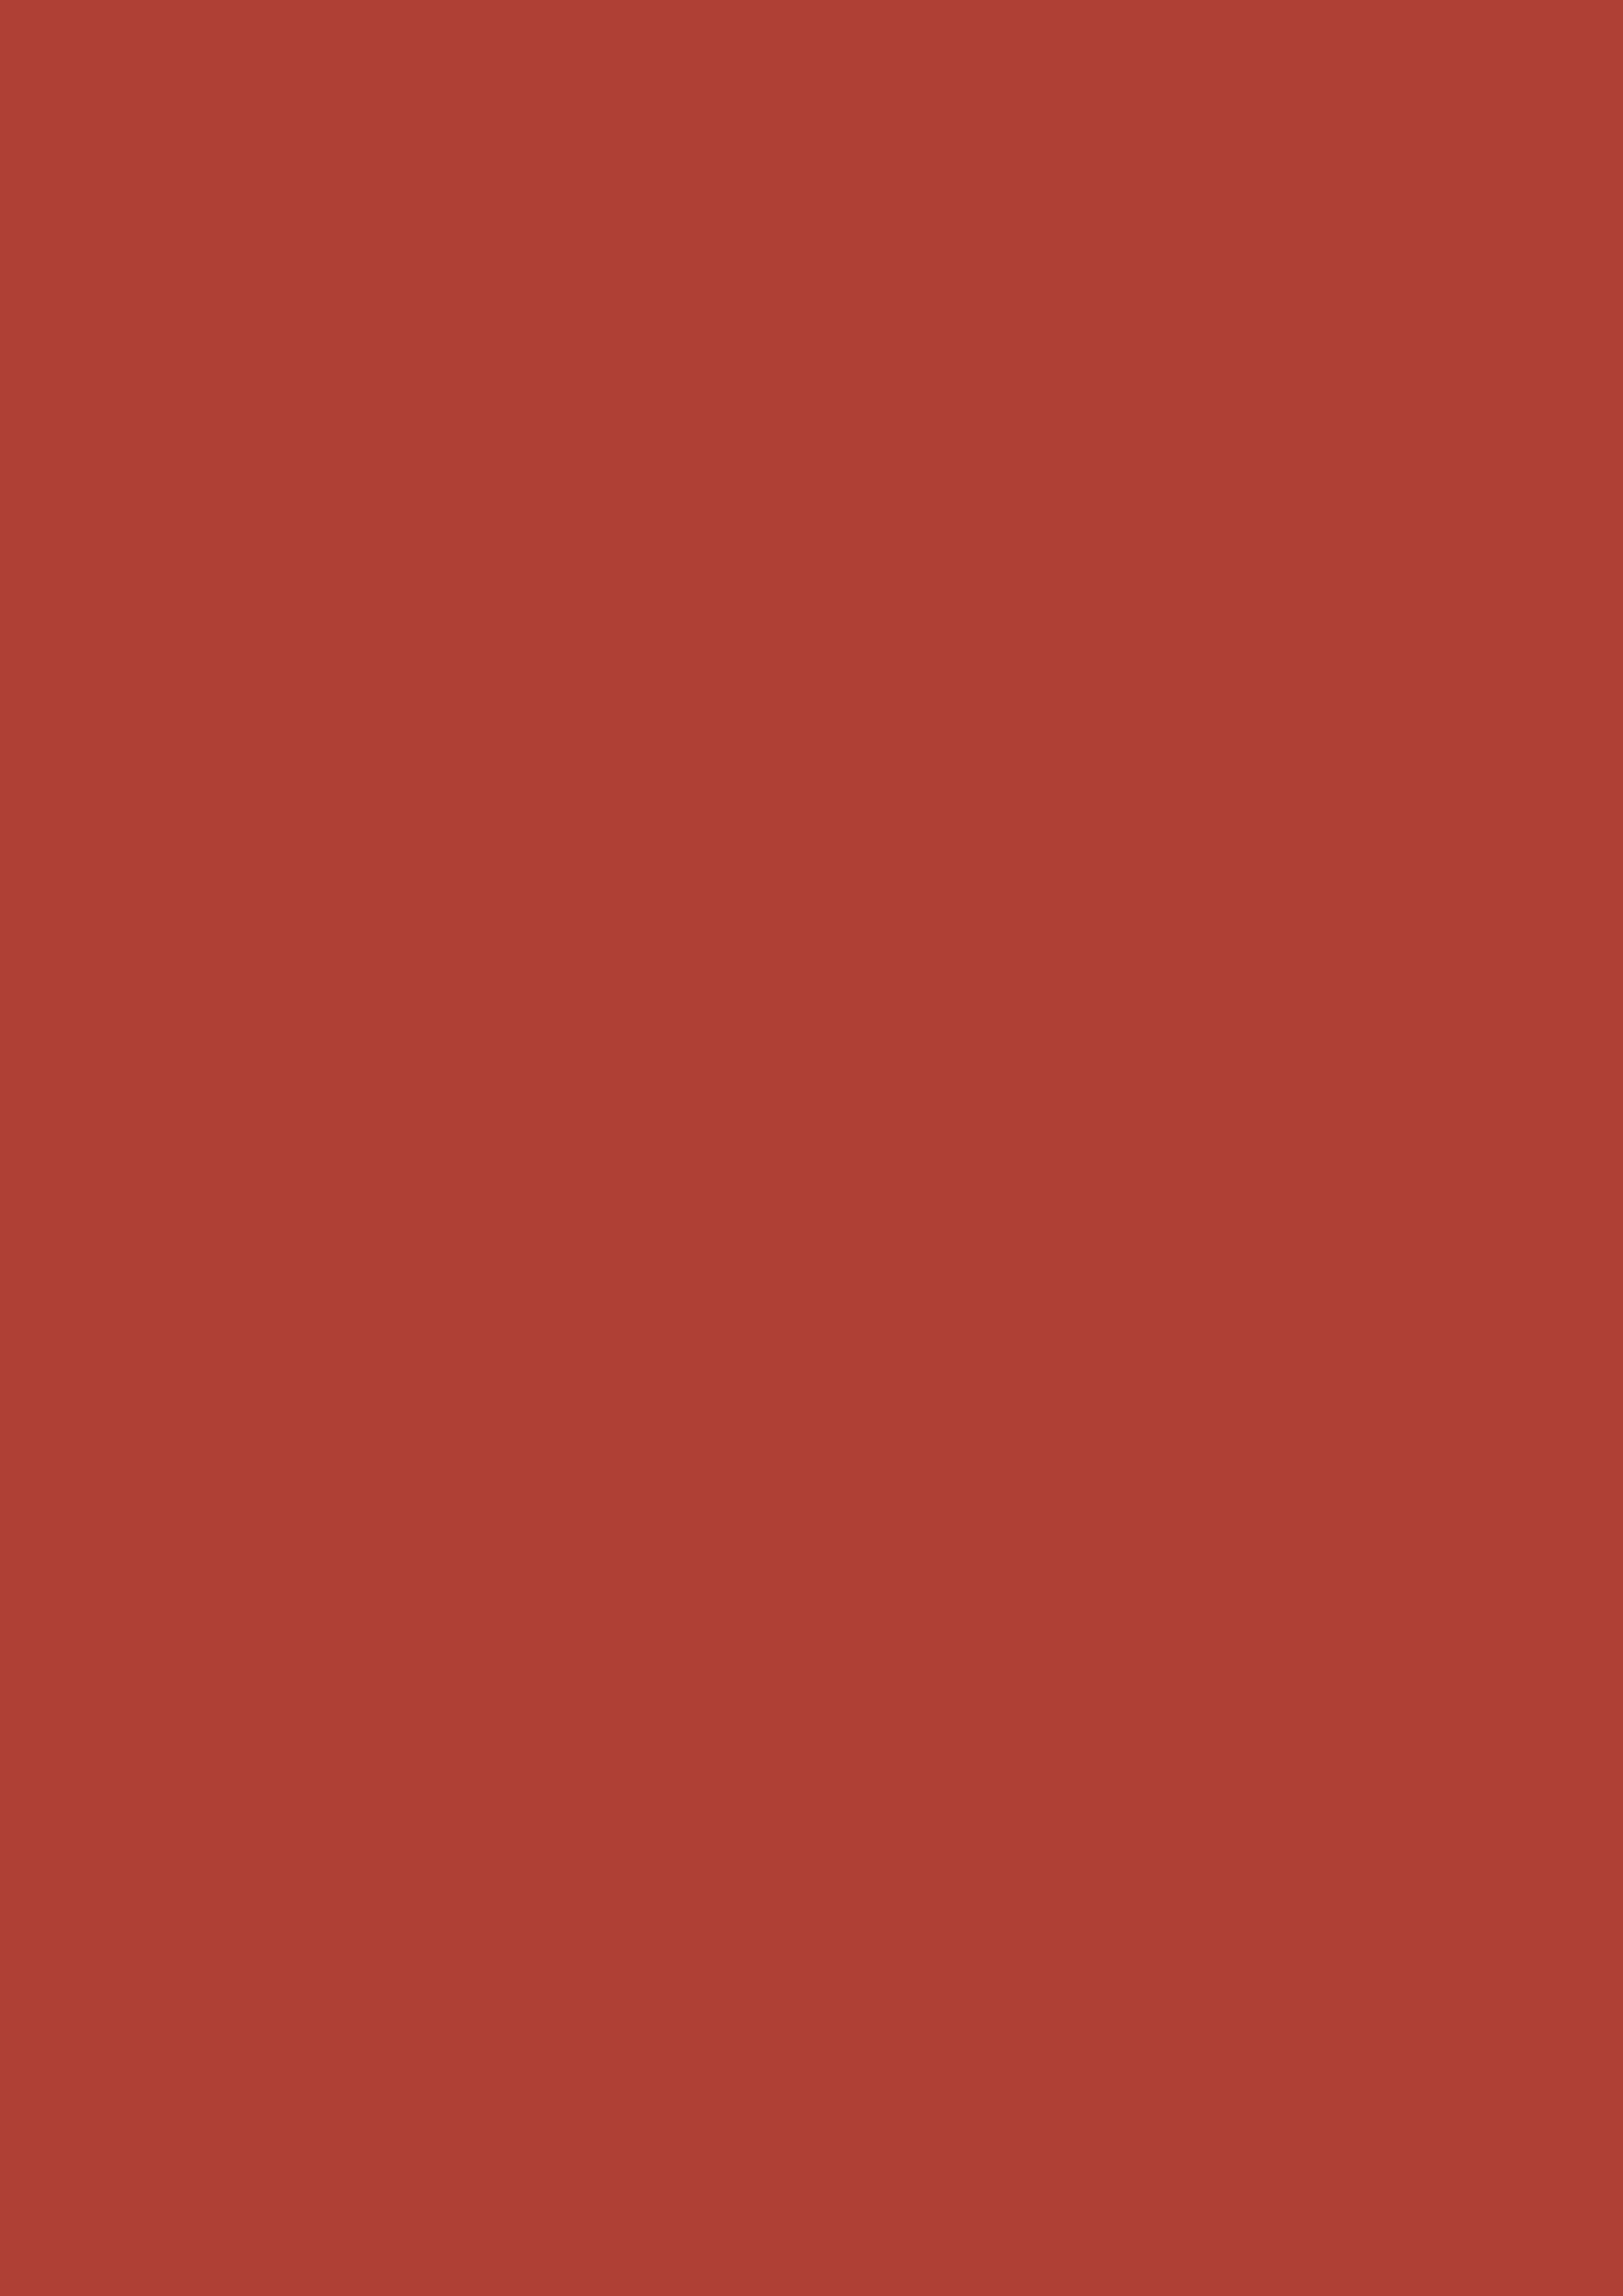 2480x3508 Pale Carmine Solid Color Background